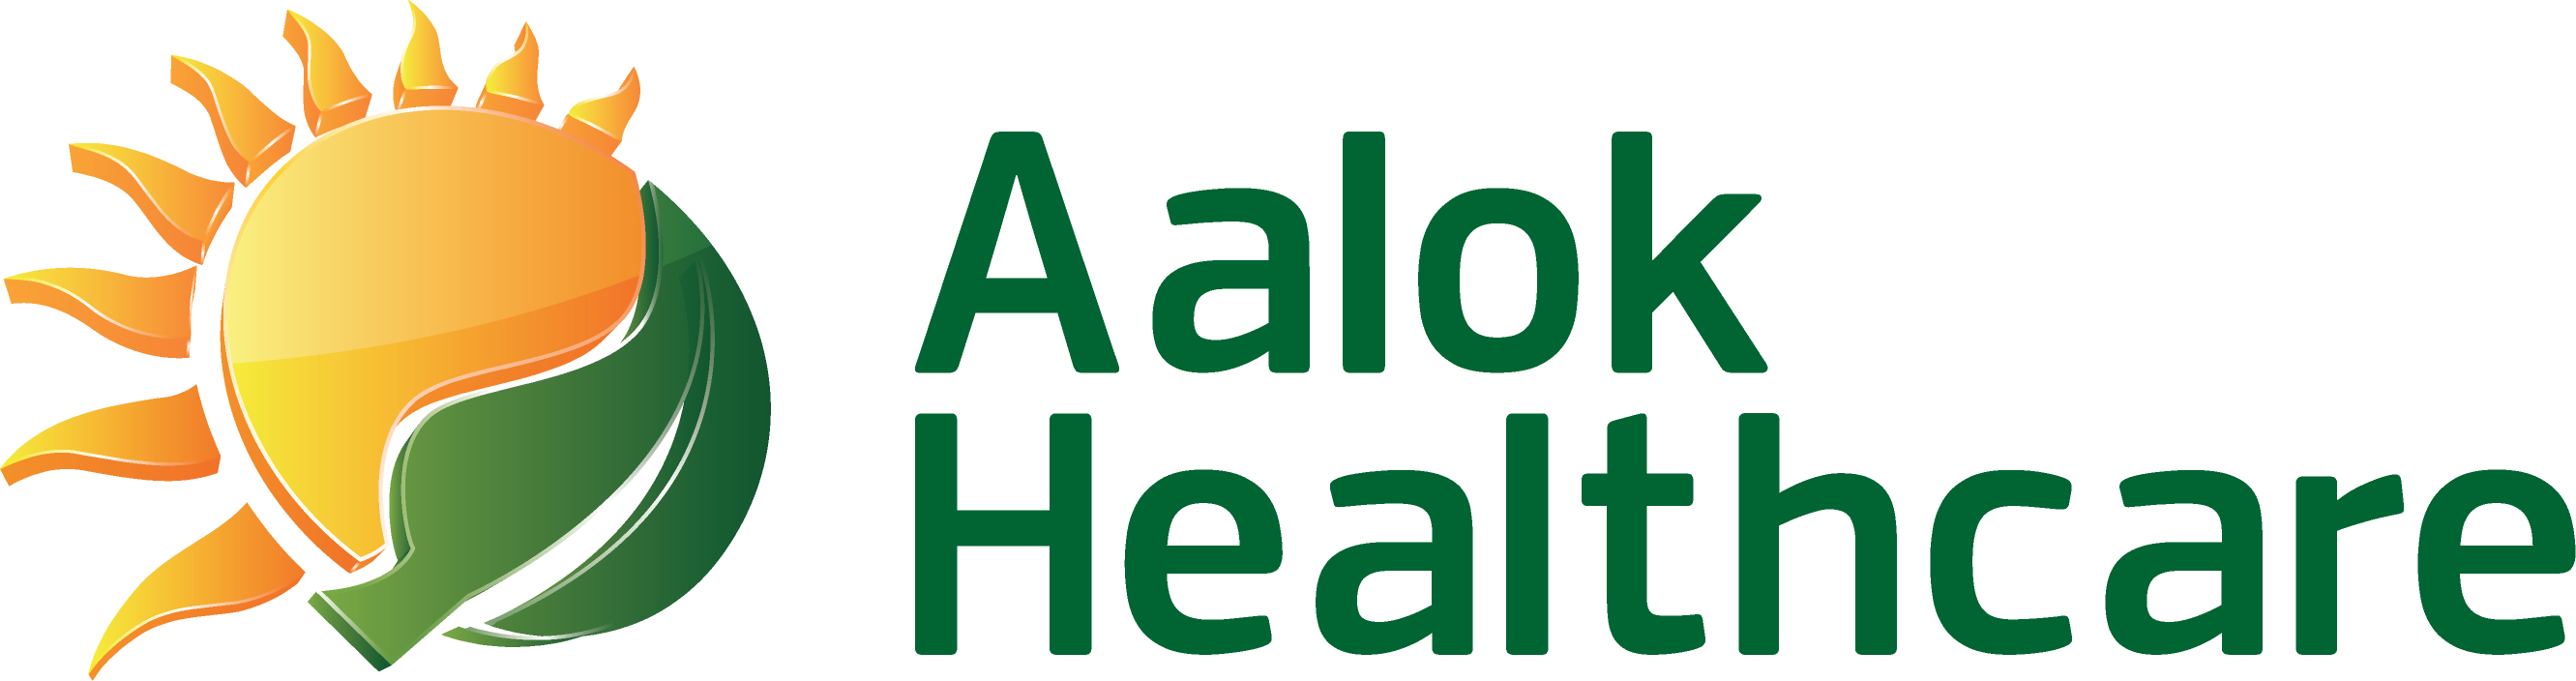 Aalok Logo